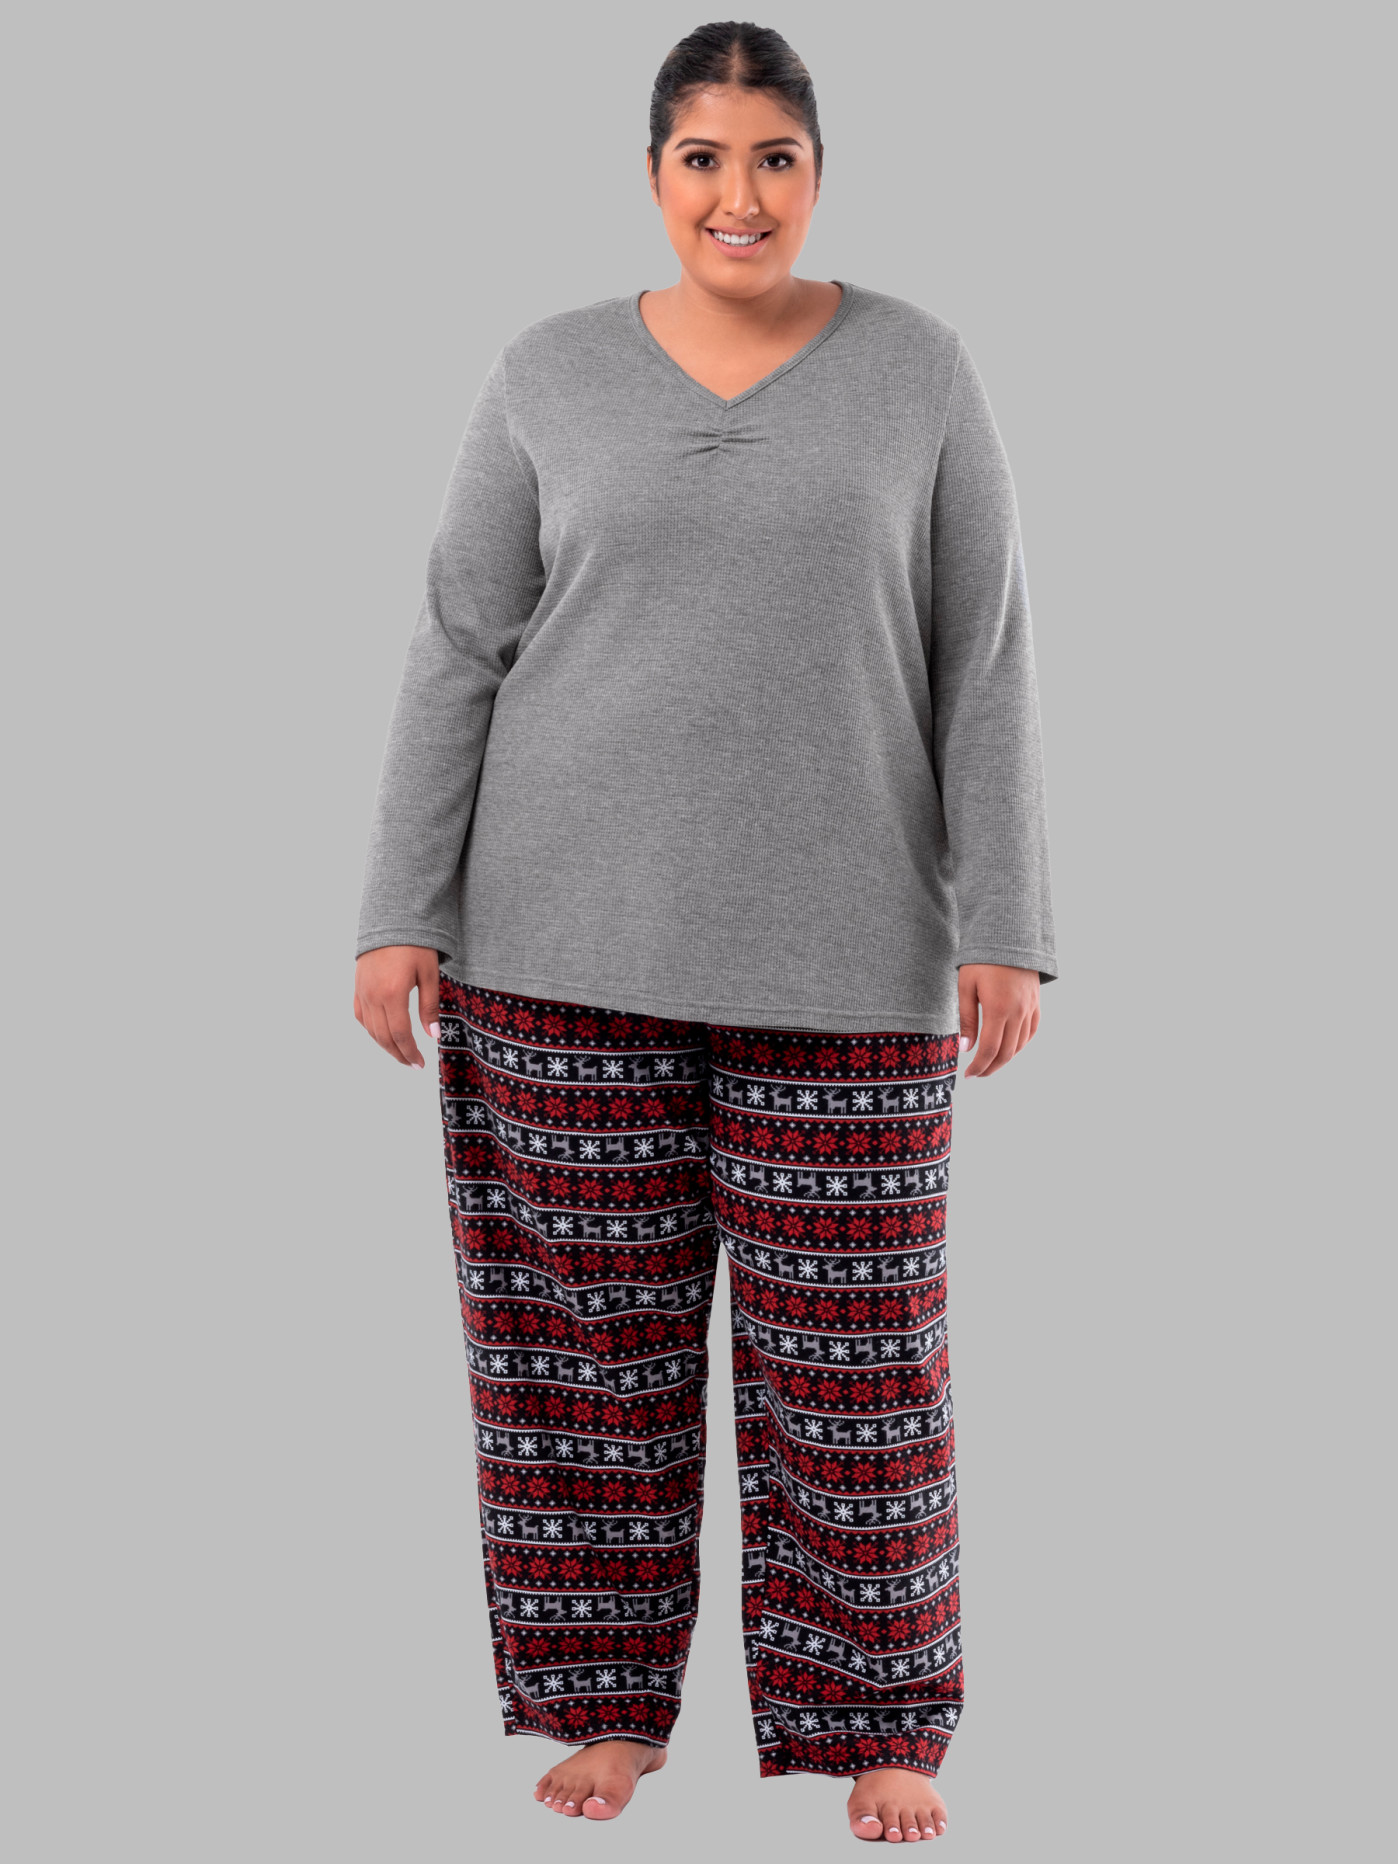 Just Love Women's Thermal Underwear Pajamas Set (Red, 2X Plus